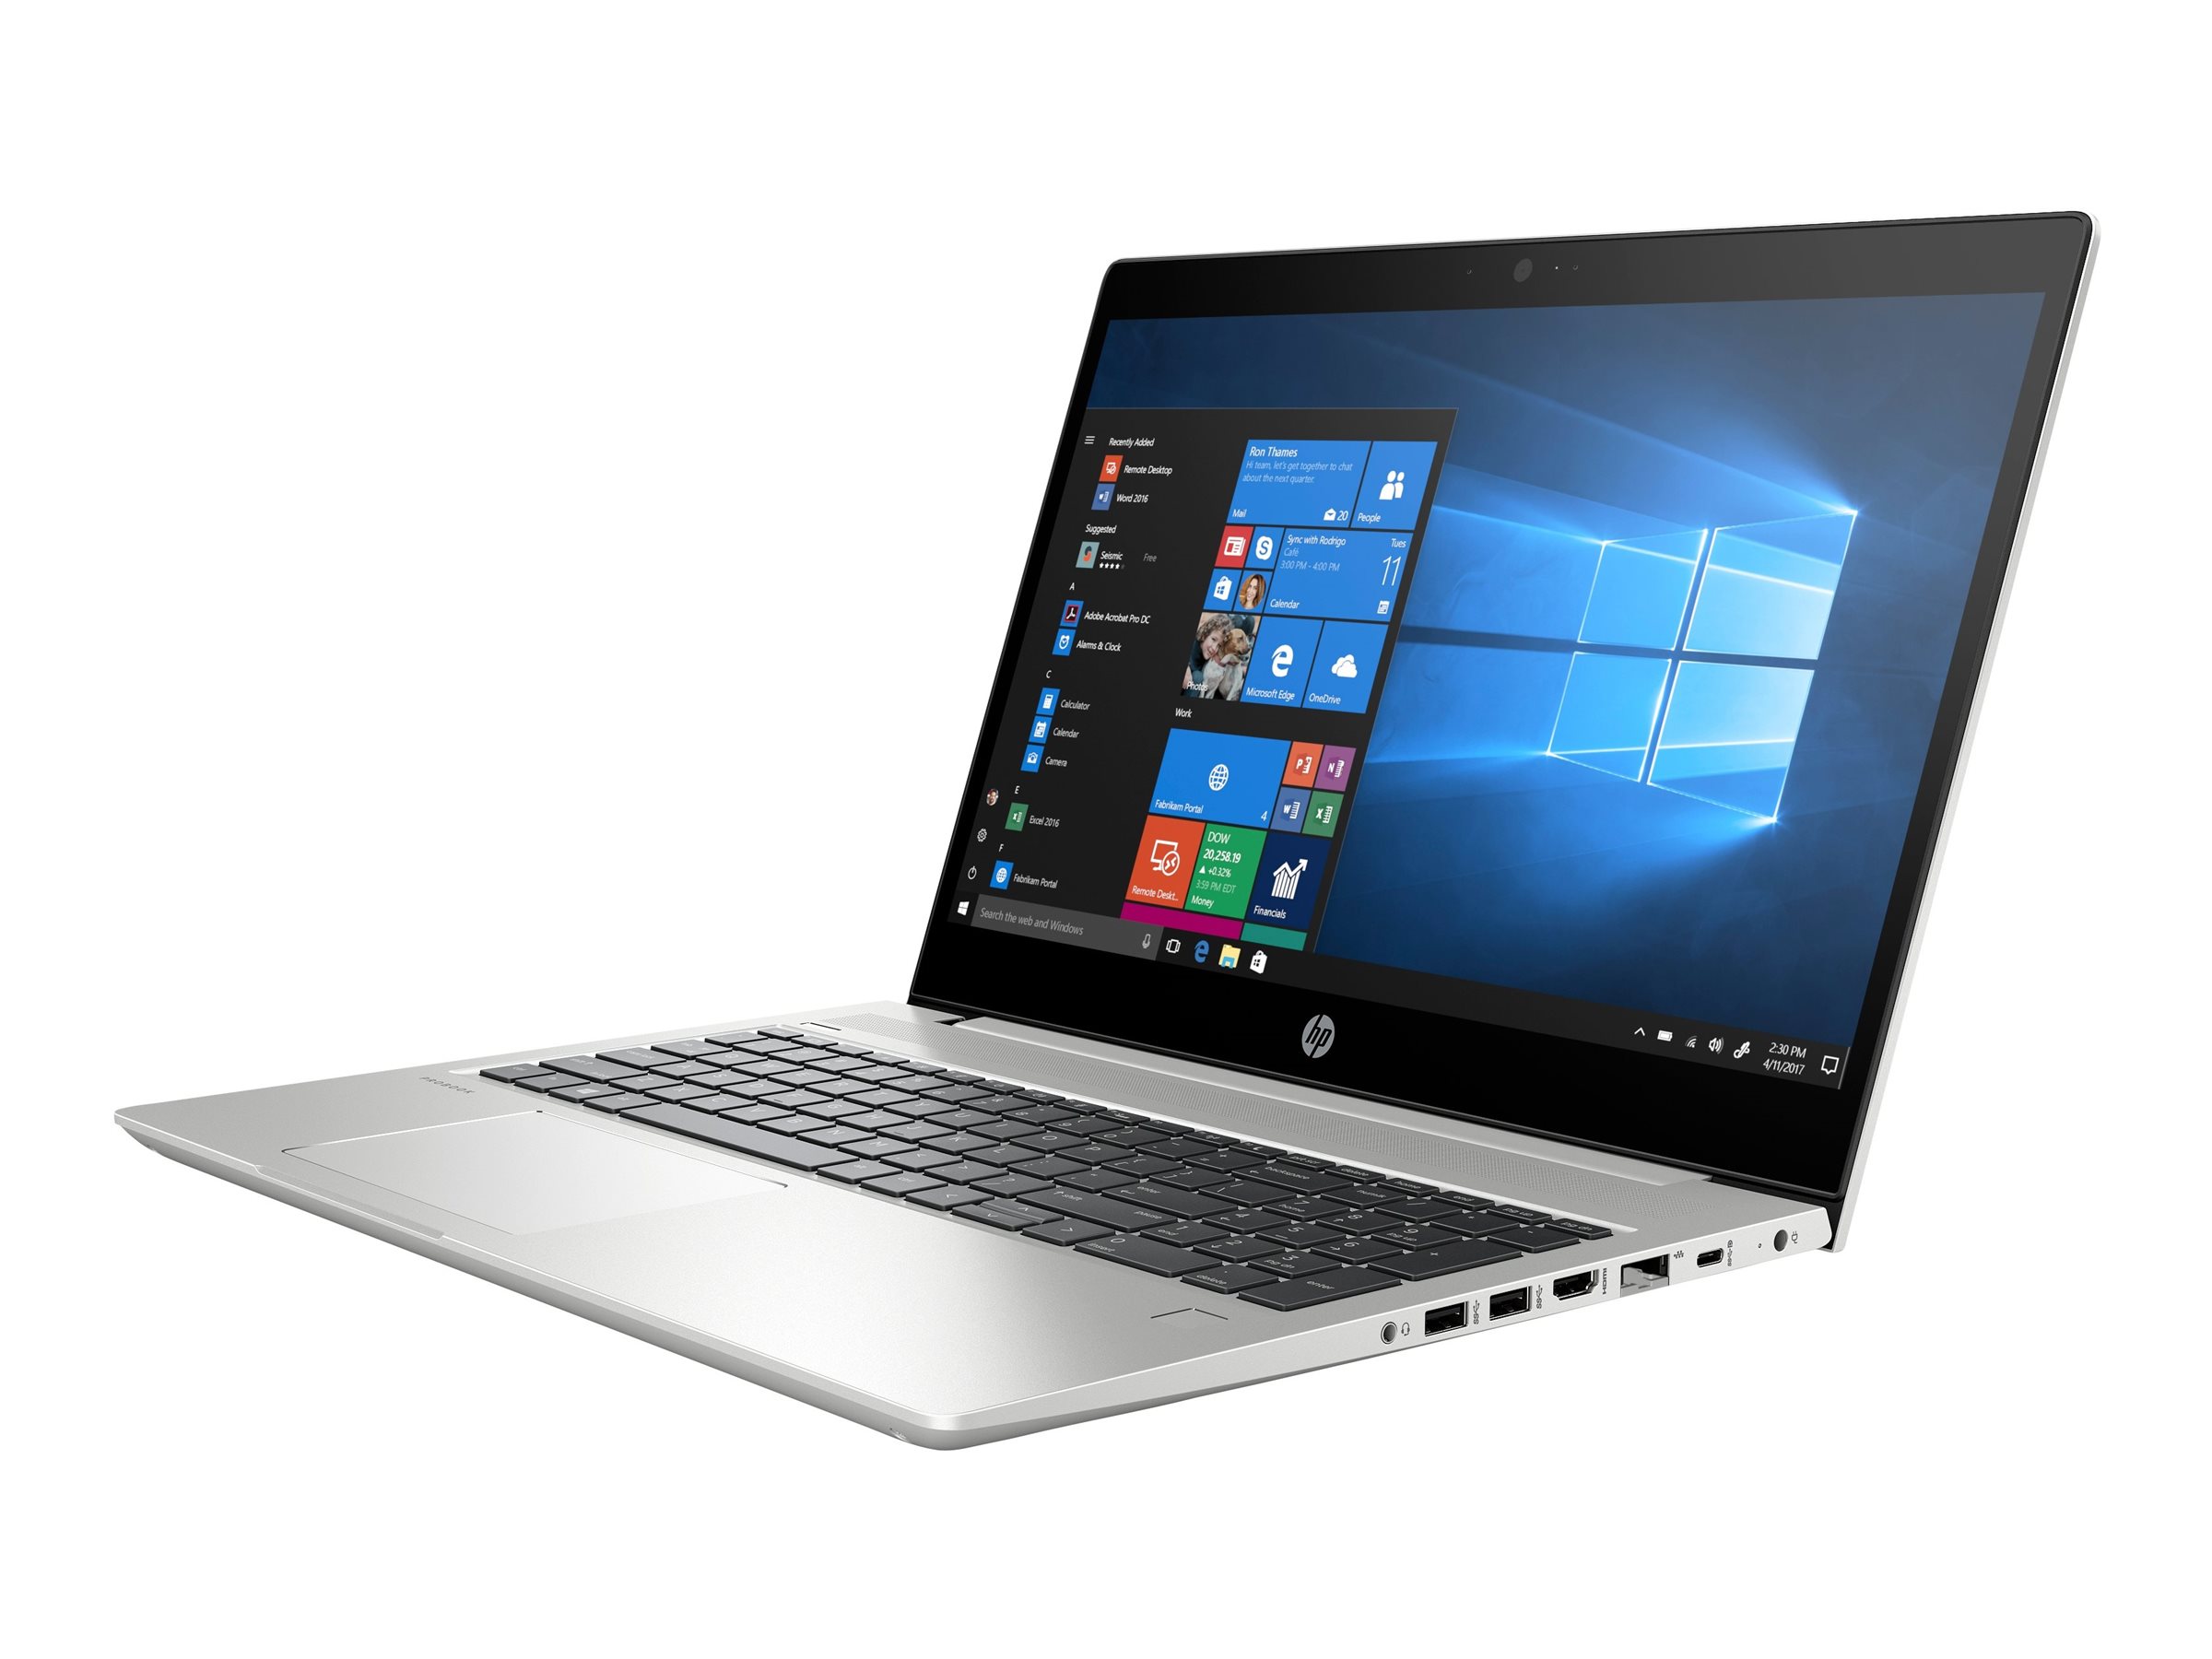 HP ProBook 450 G6 Notebook | www.shi.com